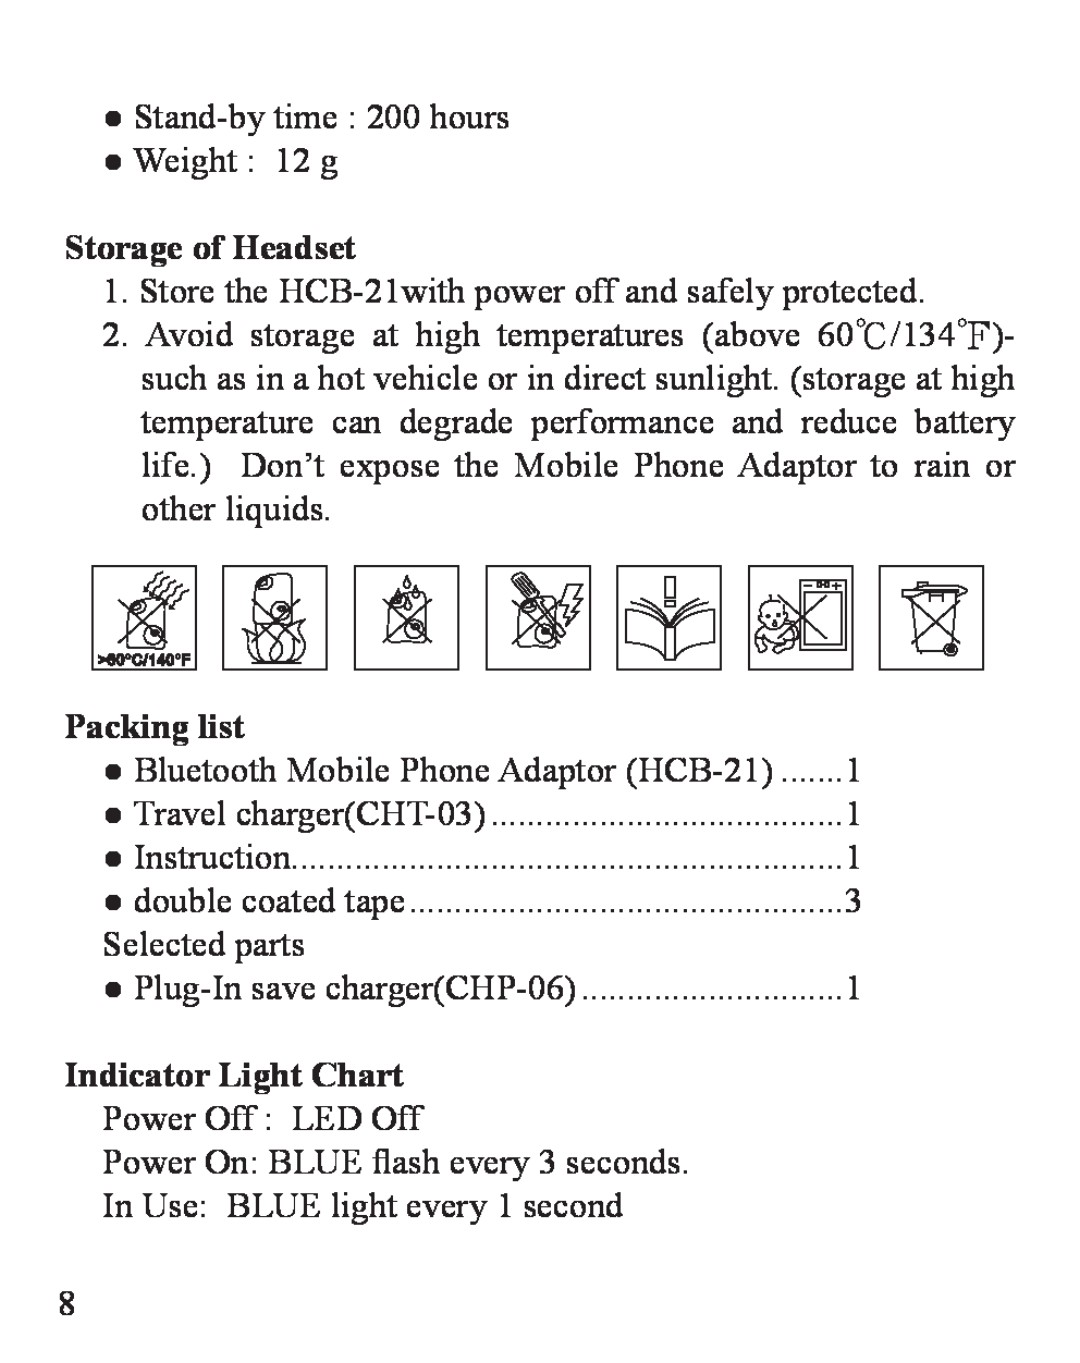 Huey Chiao HCB-21 manual Storage of Headset, Packing list, Indicator Light Chart 